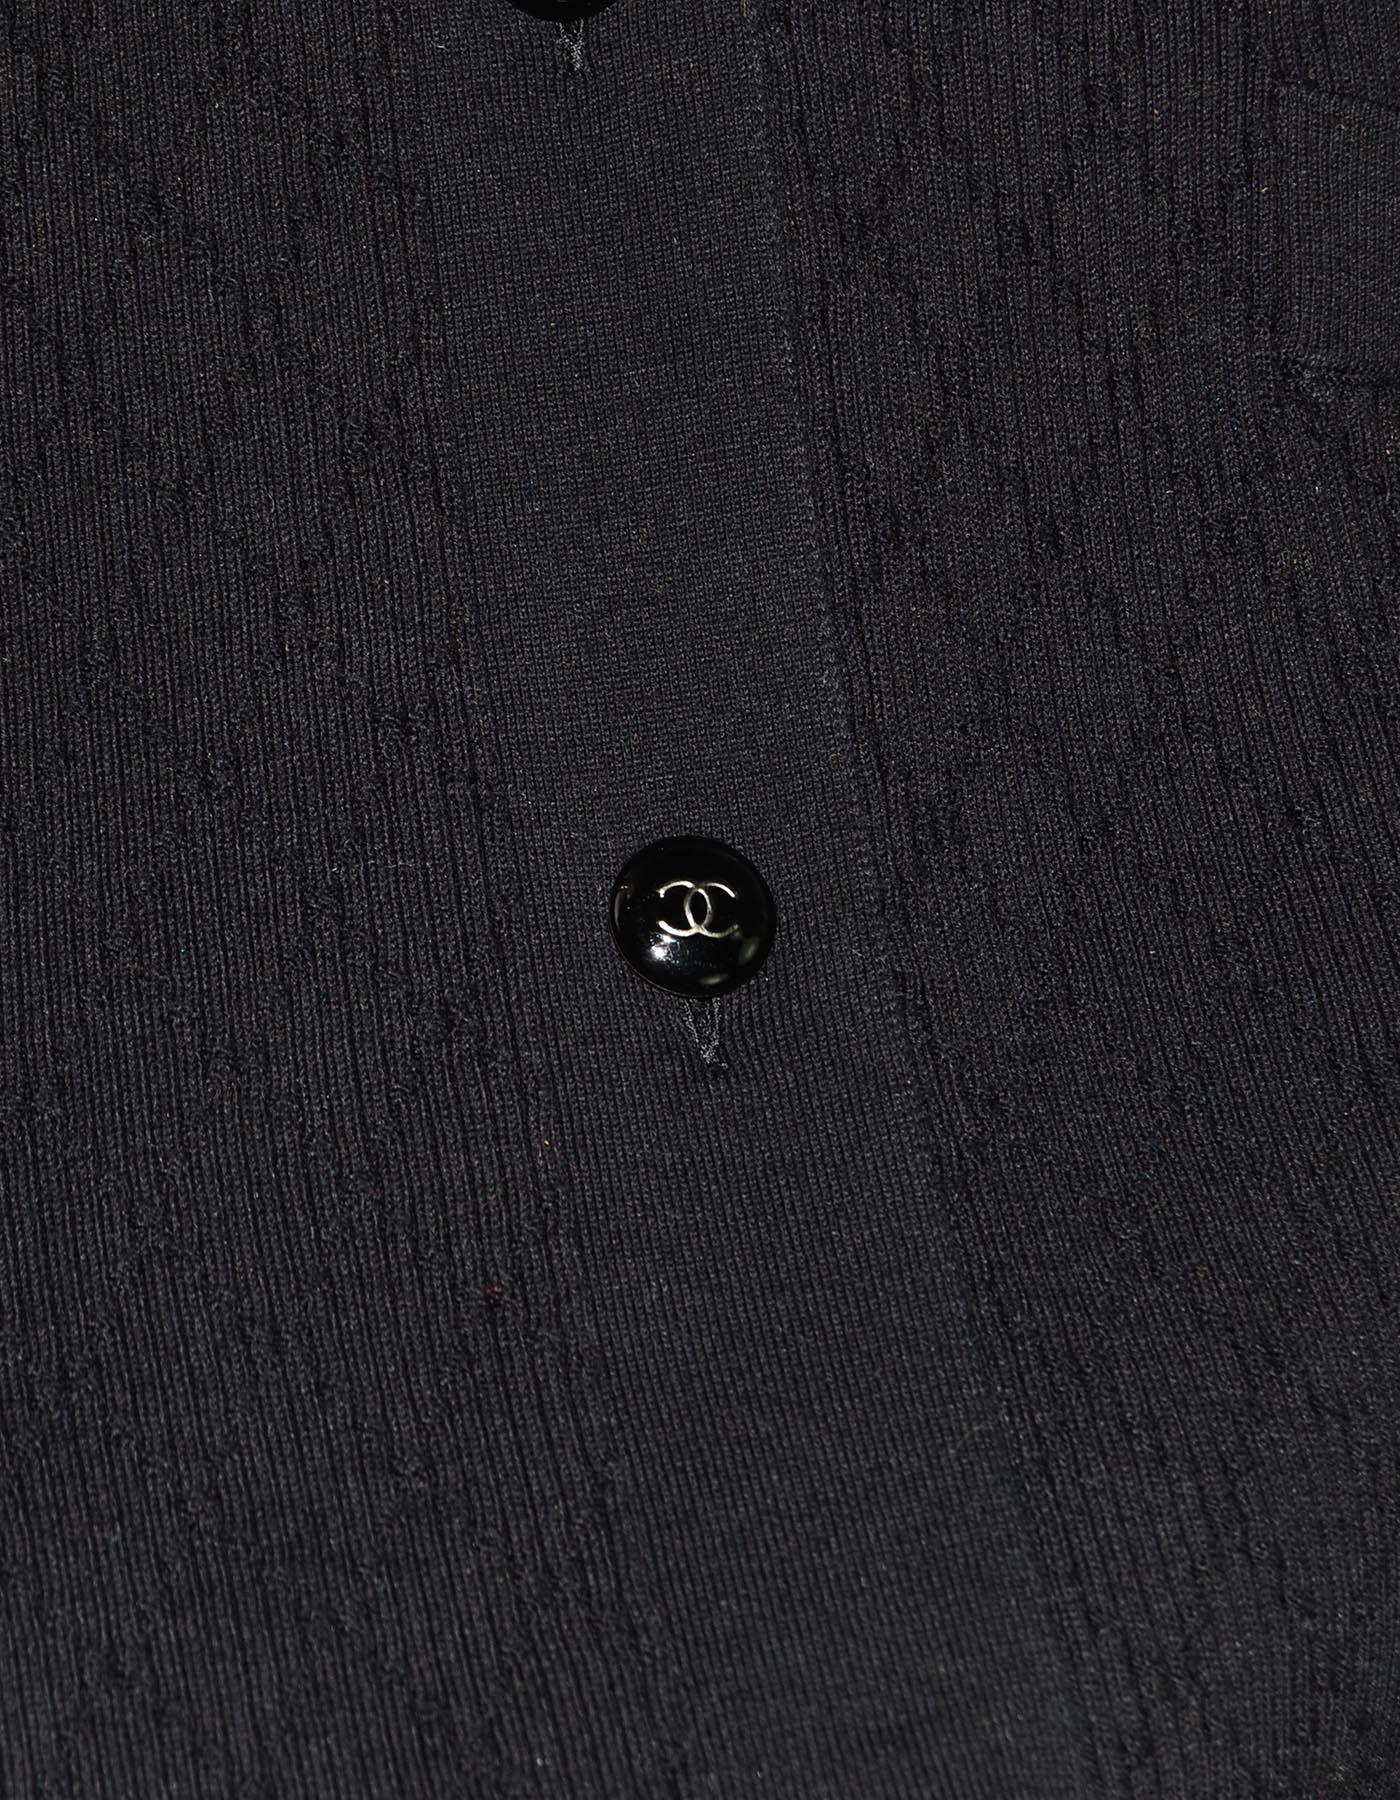 Women's Chanel Black Quilted Cotton Long Cardigan W/ Silvertone CC Buttons Sz XL